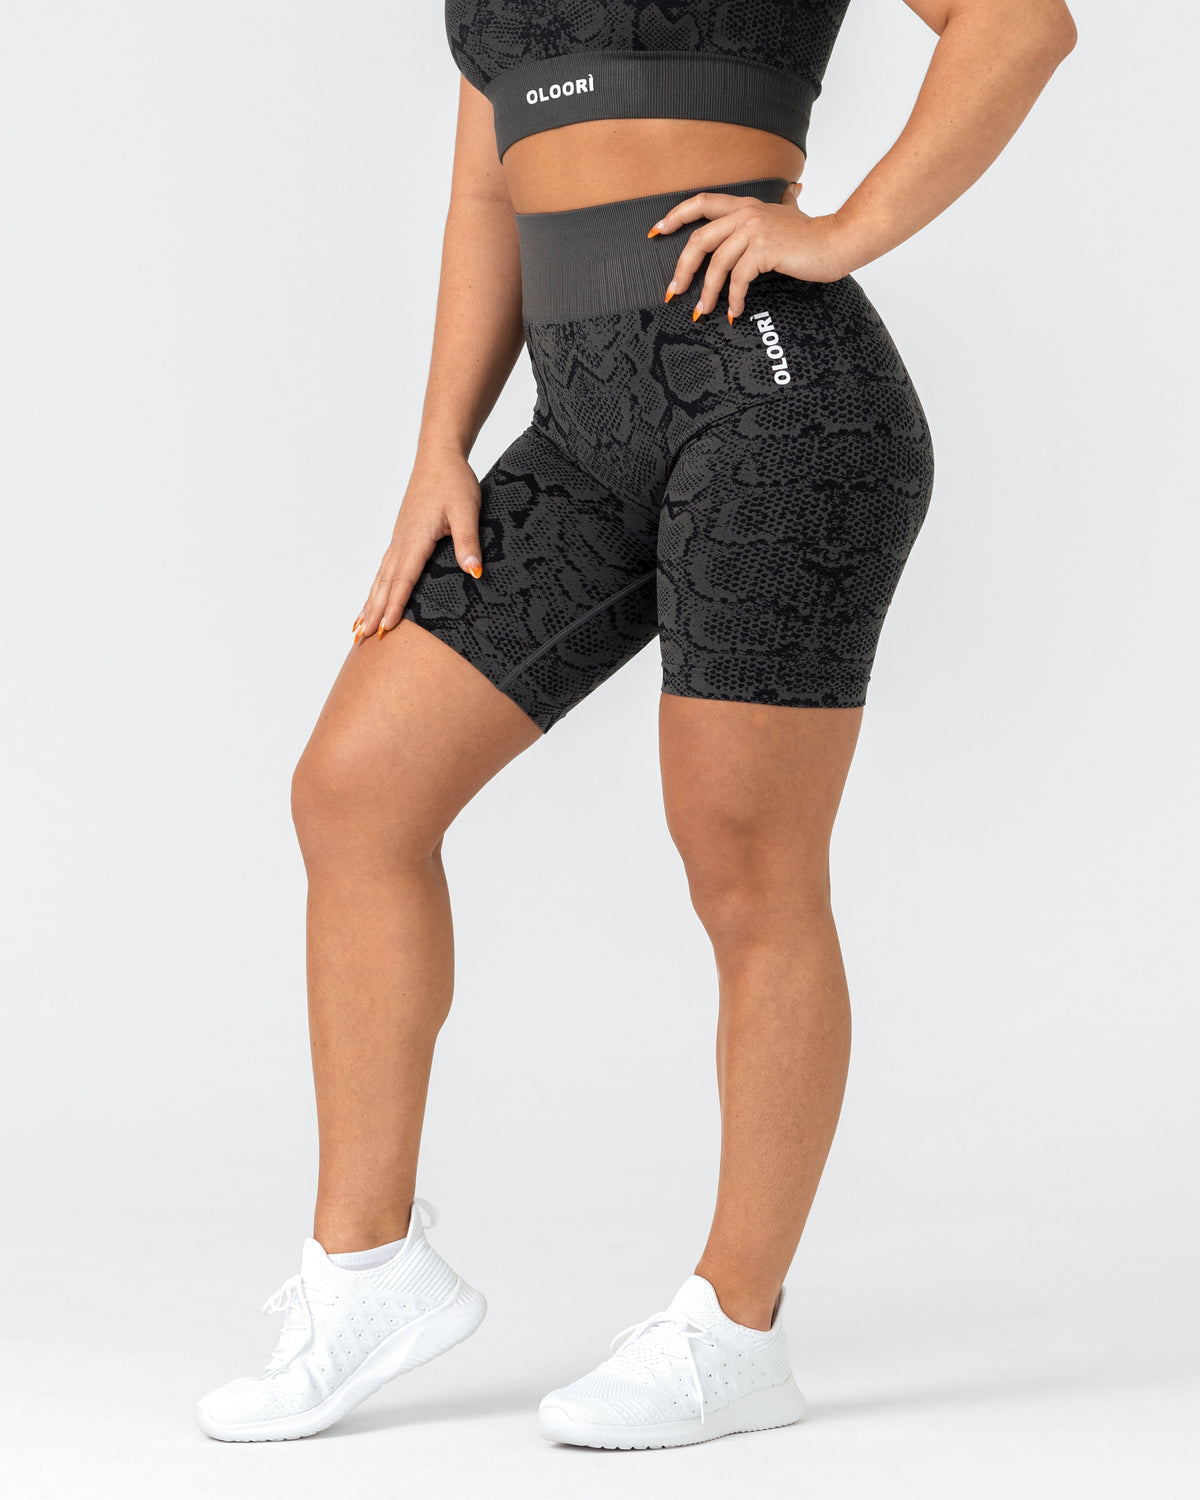 Panther Elevate Seamless Shorts - Scrunch Bum Workout Shorts - Oloori –  OLOORÌ ATHLETICS